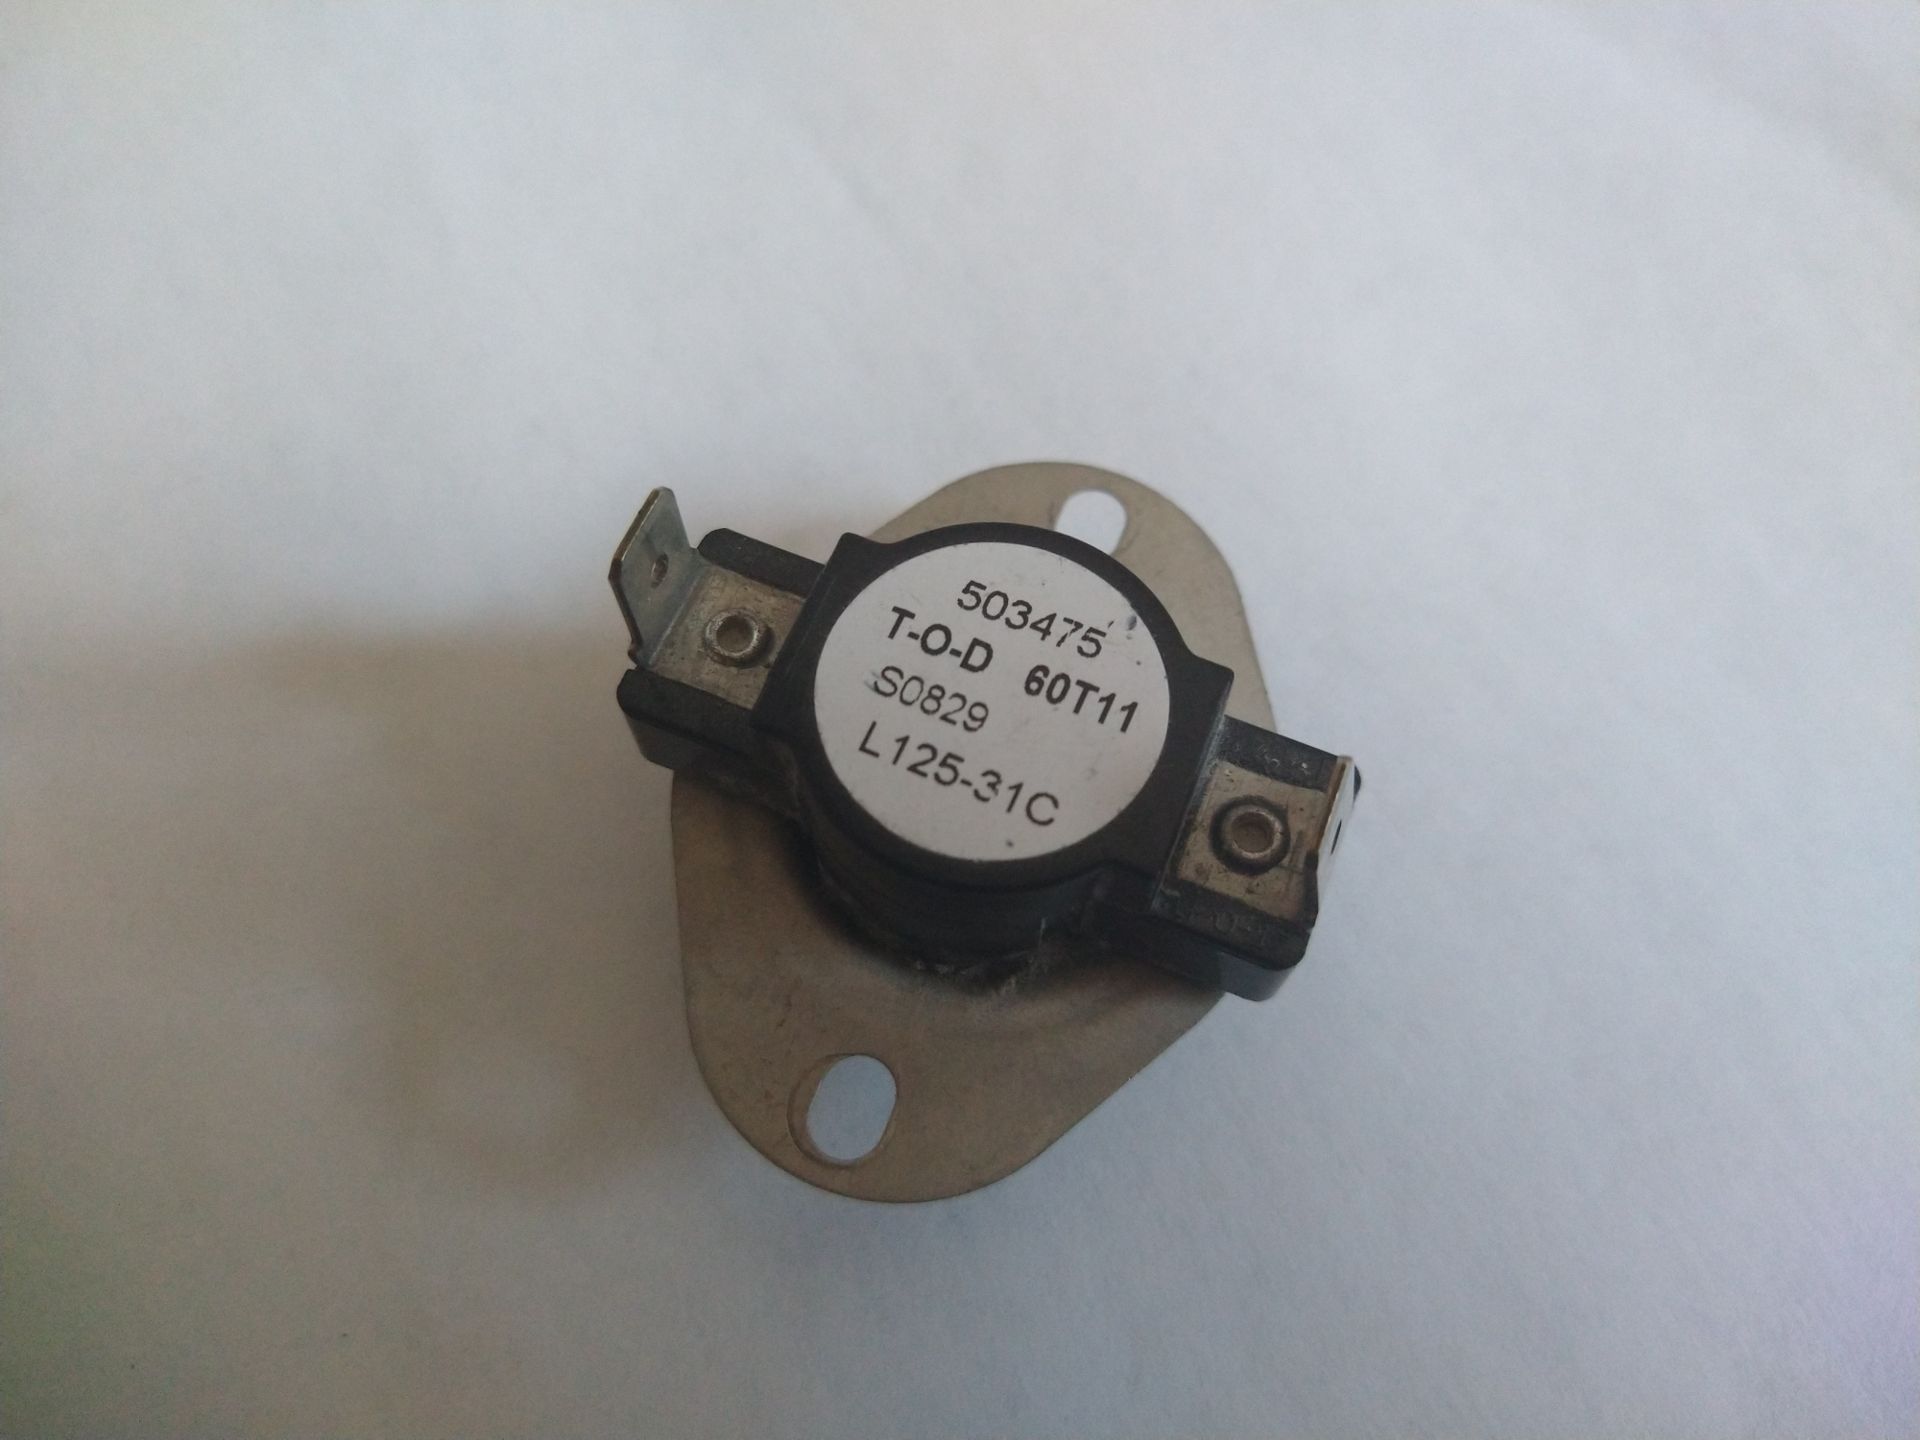 LG Dryer Thermostat 503475  L125-31C